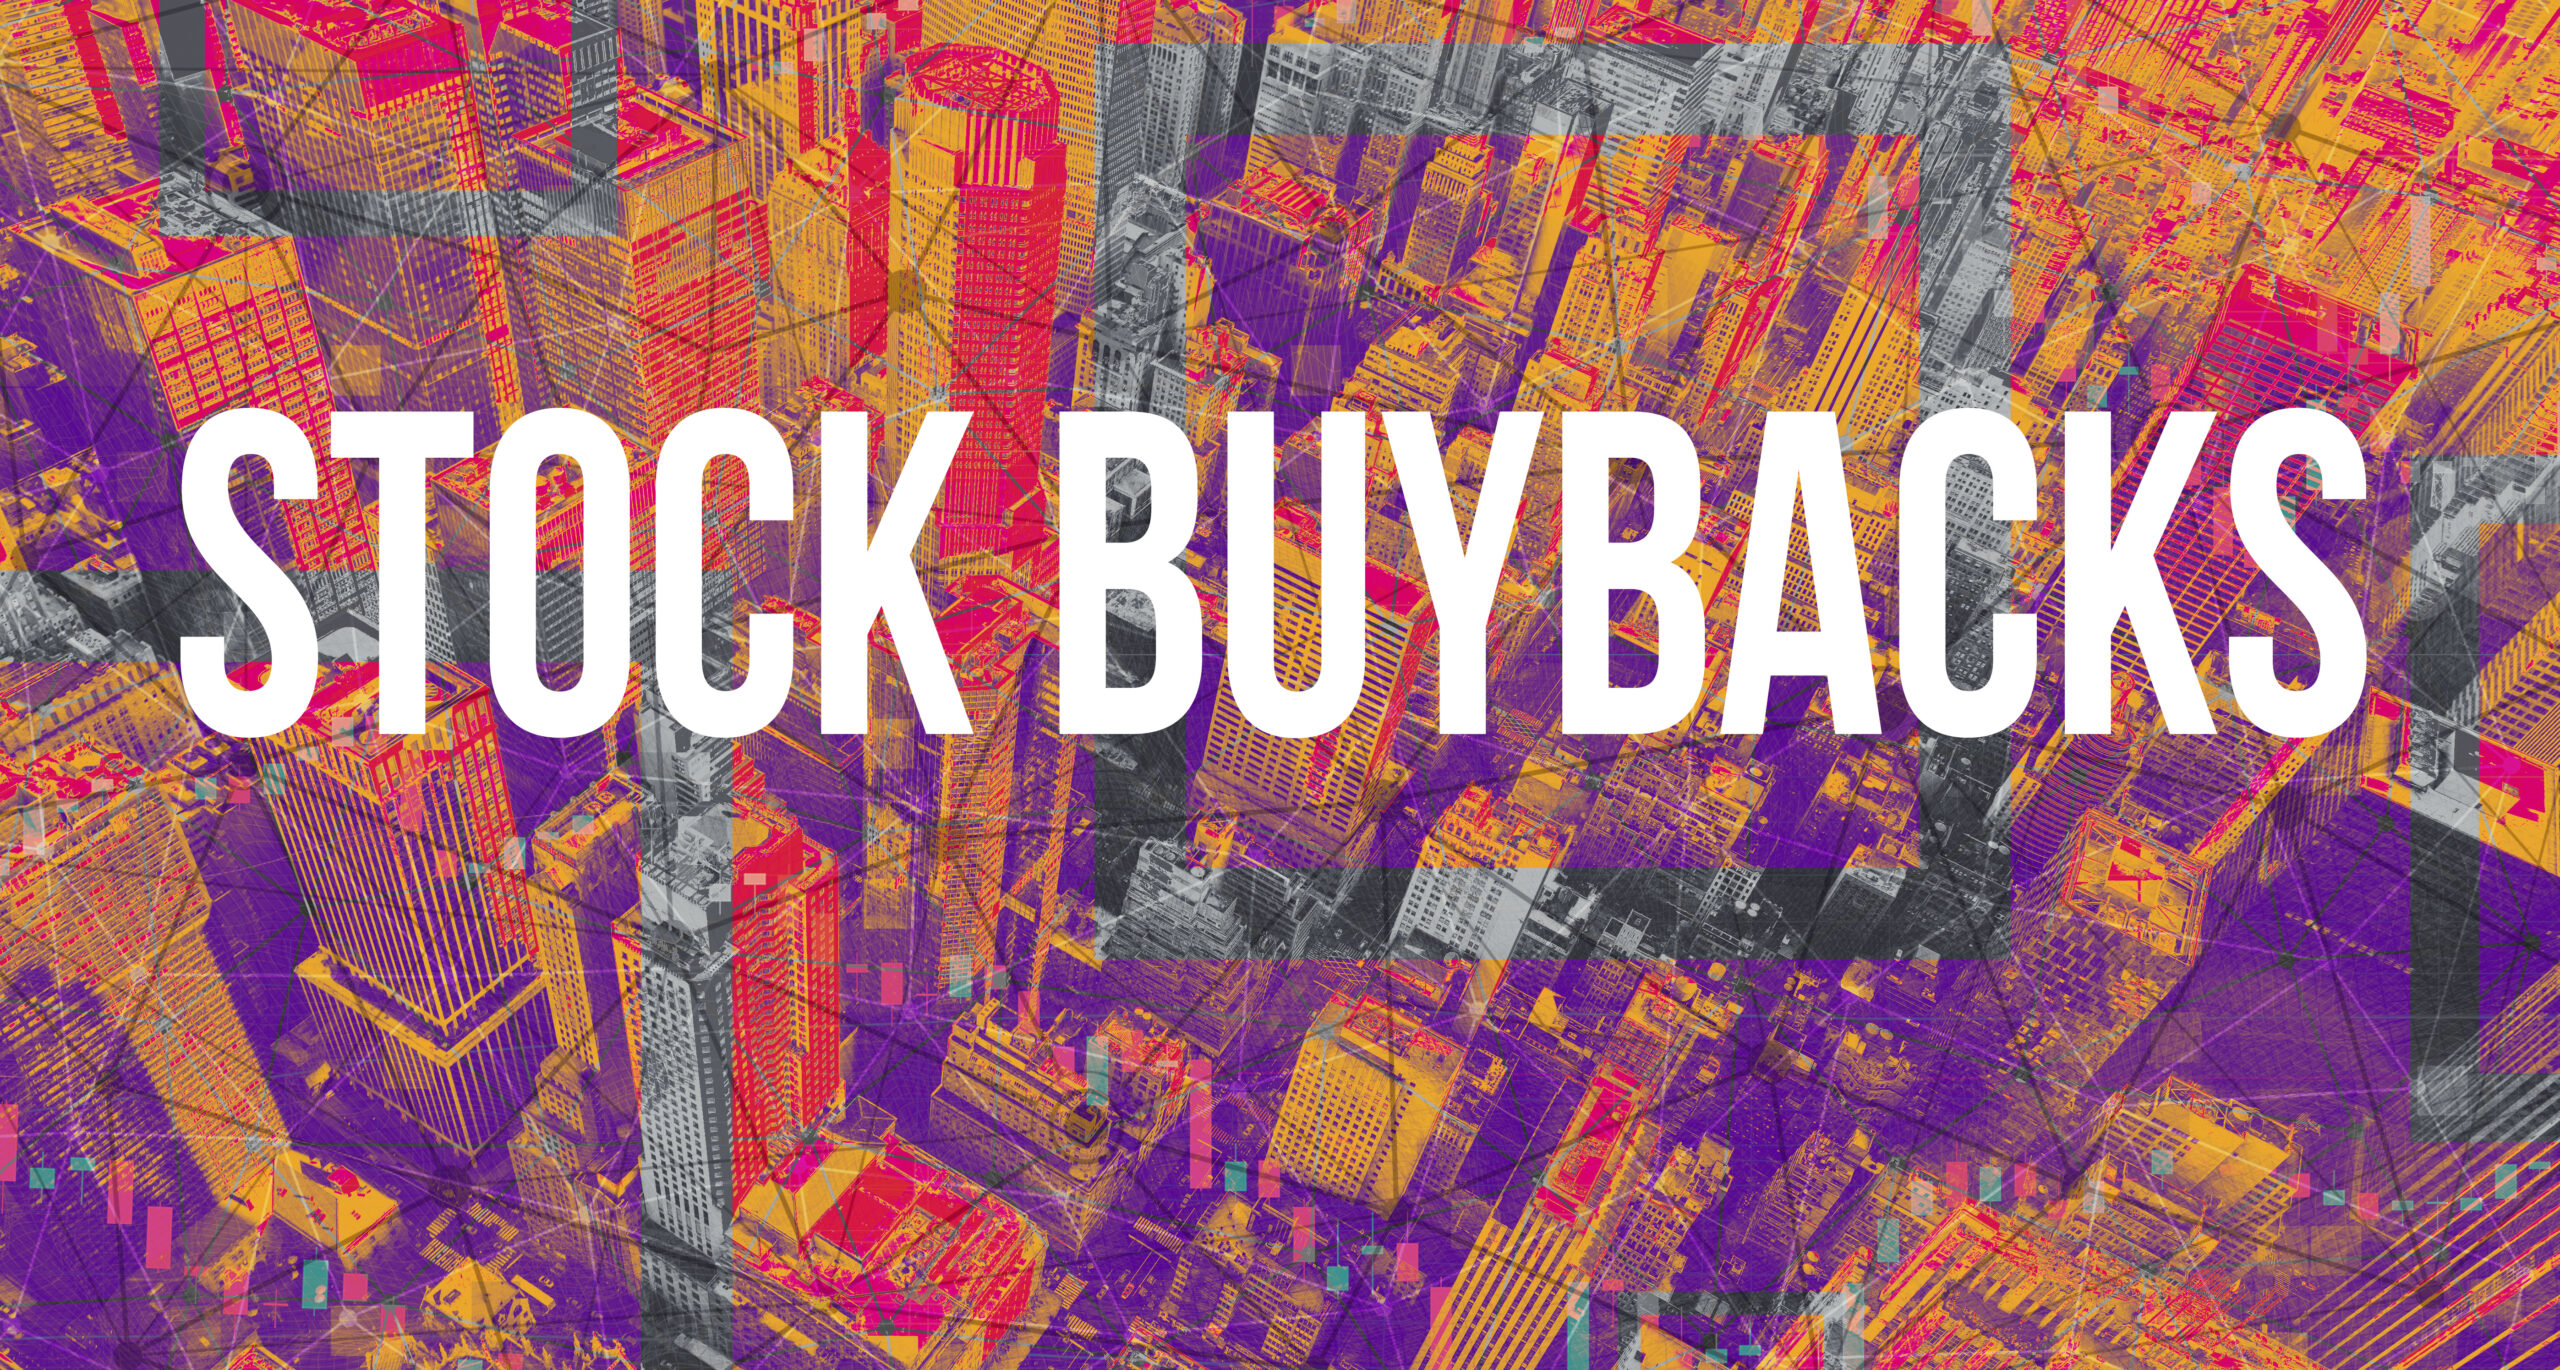 Democrats Seek to Eliminate the Stock Buyback Advantage